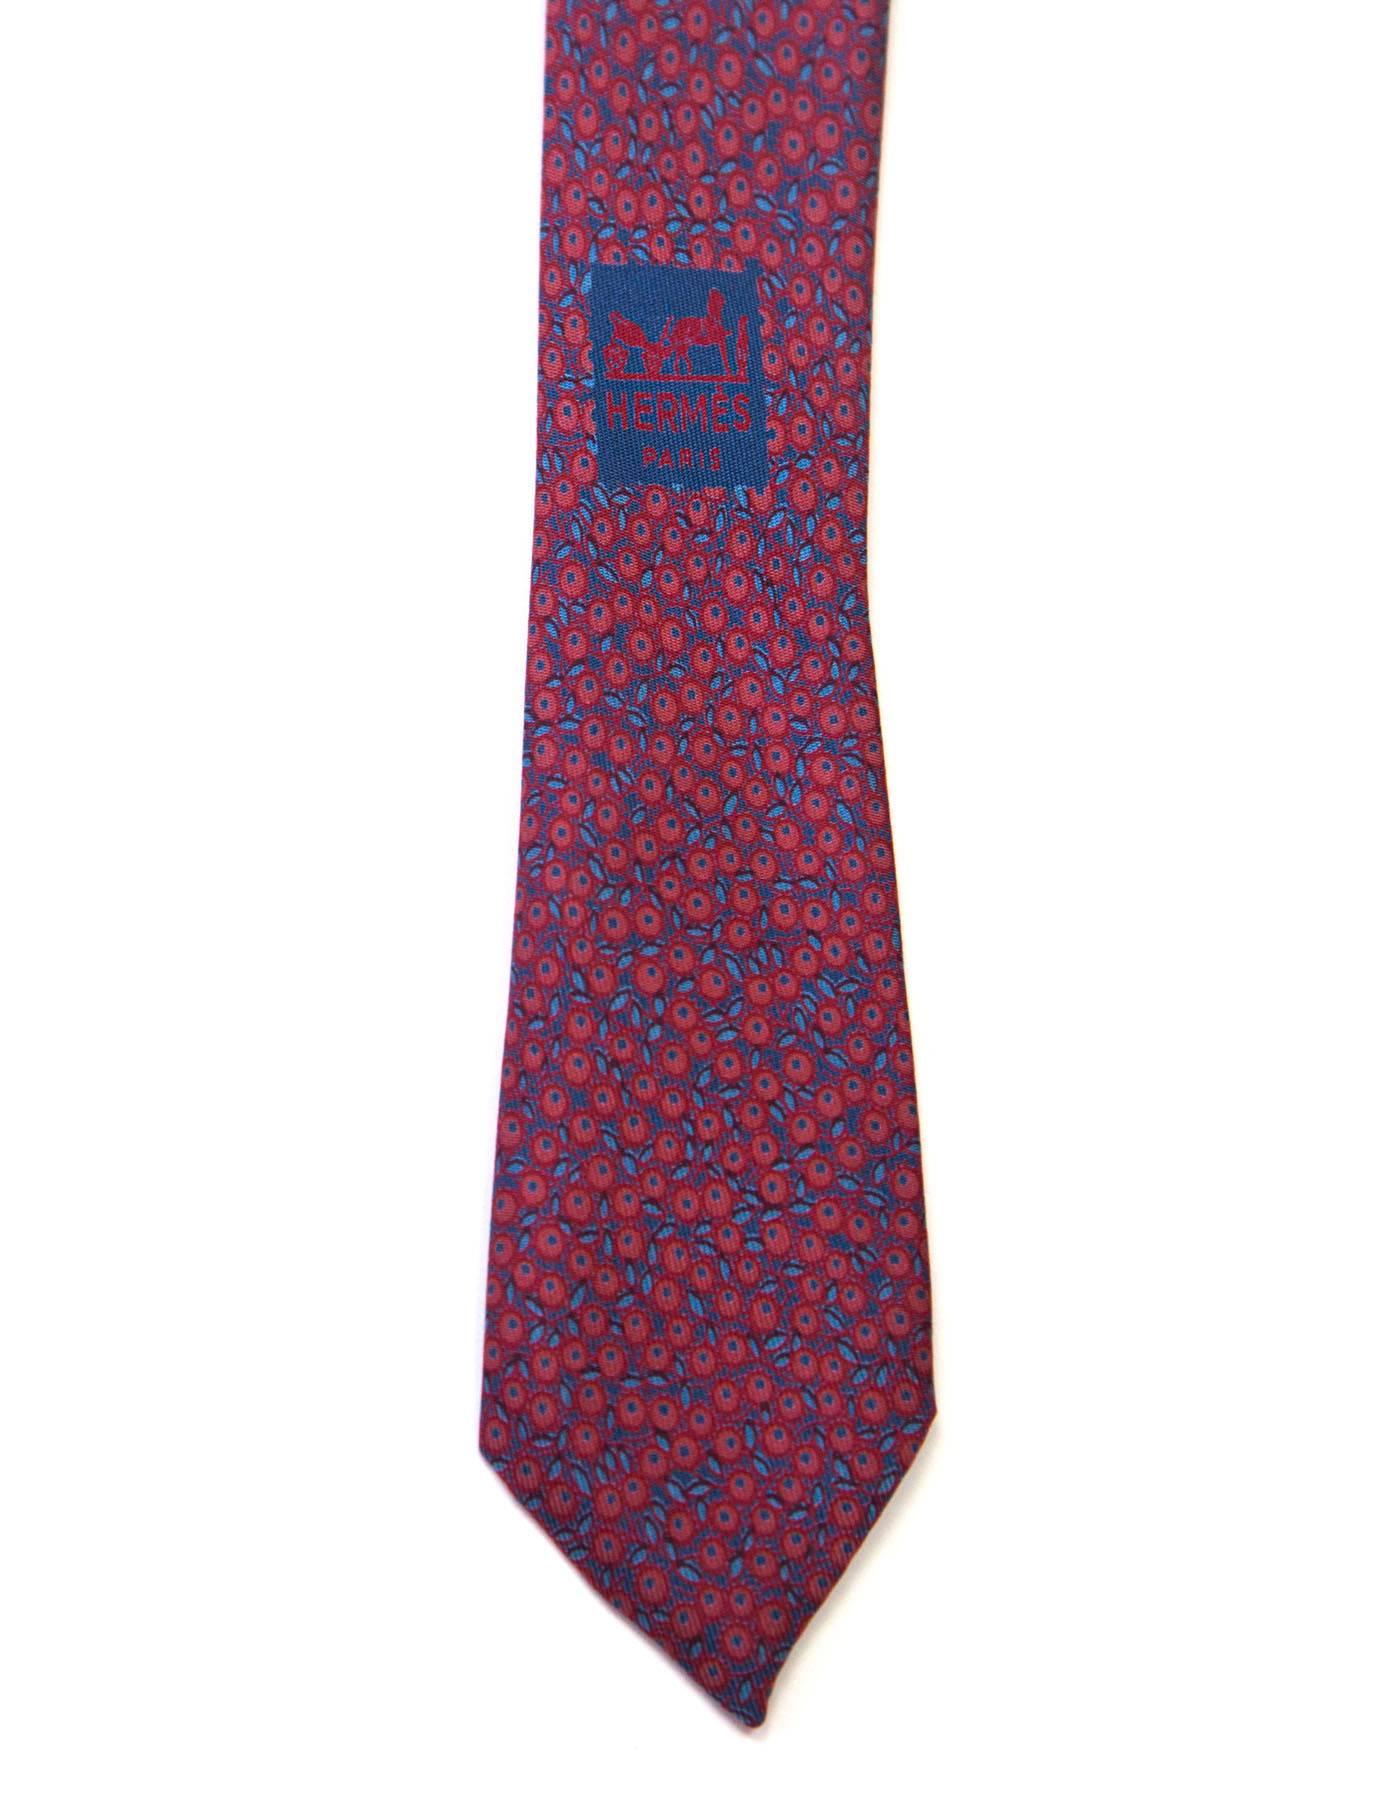 Men's Hermes Red & Blue Dot Print Silk Tie